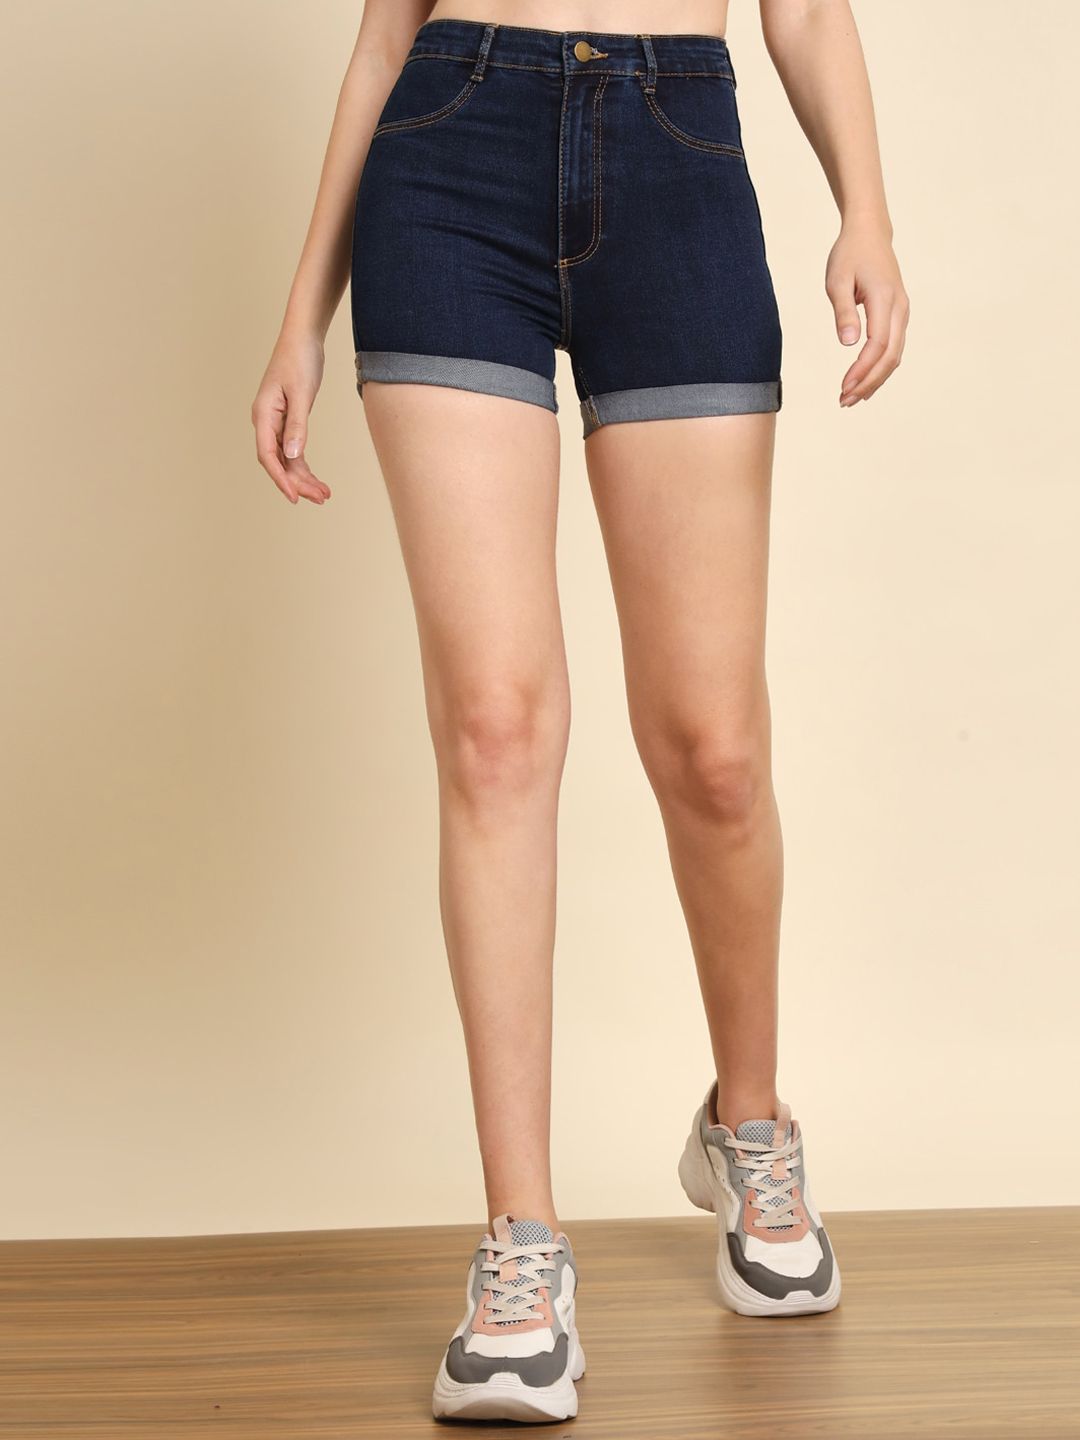 BAESD Women Skinny Fit Denim Shorts Price in India